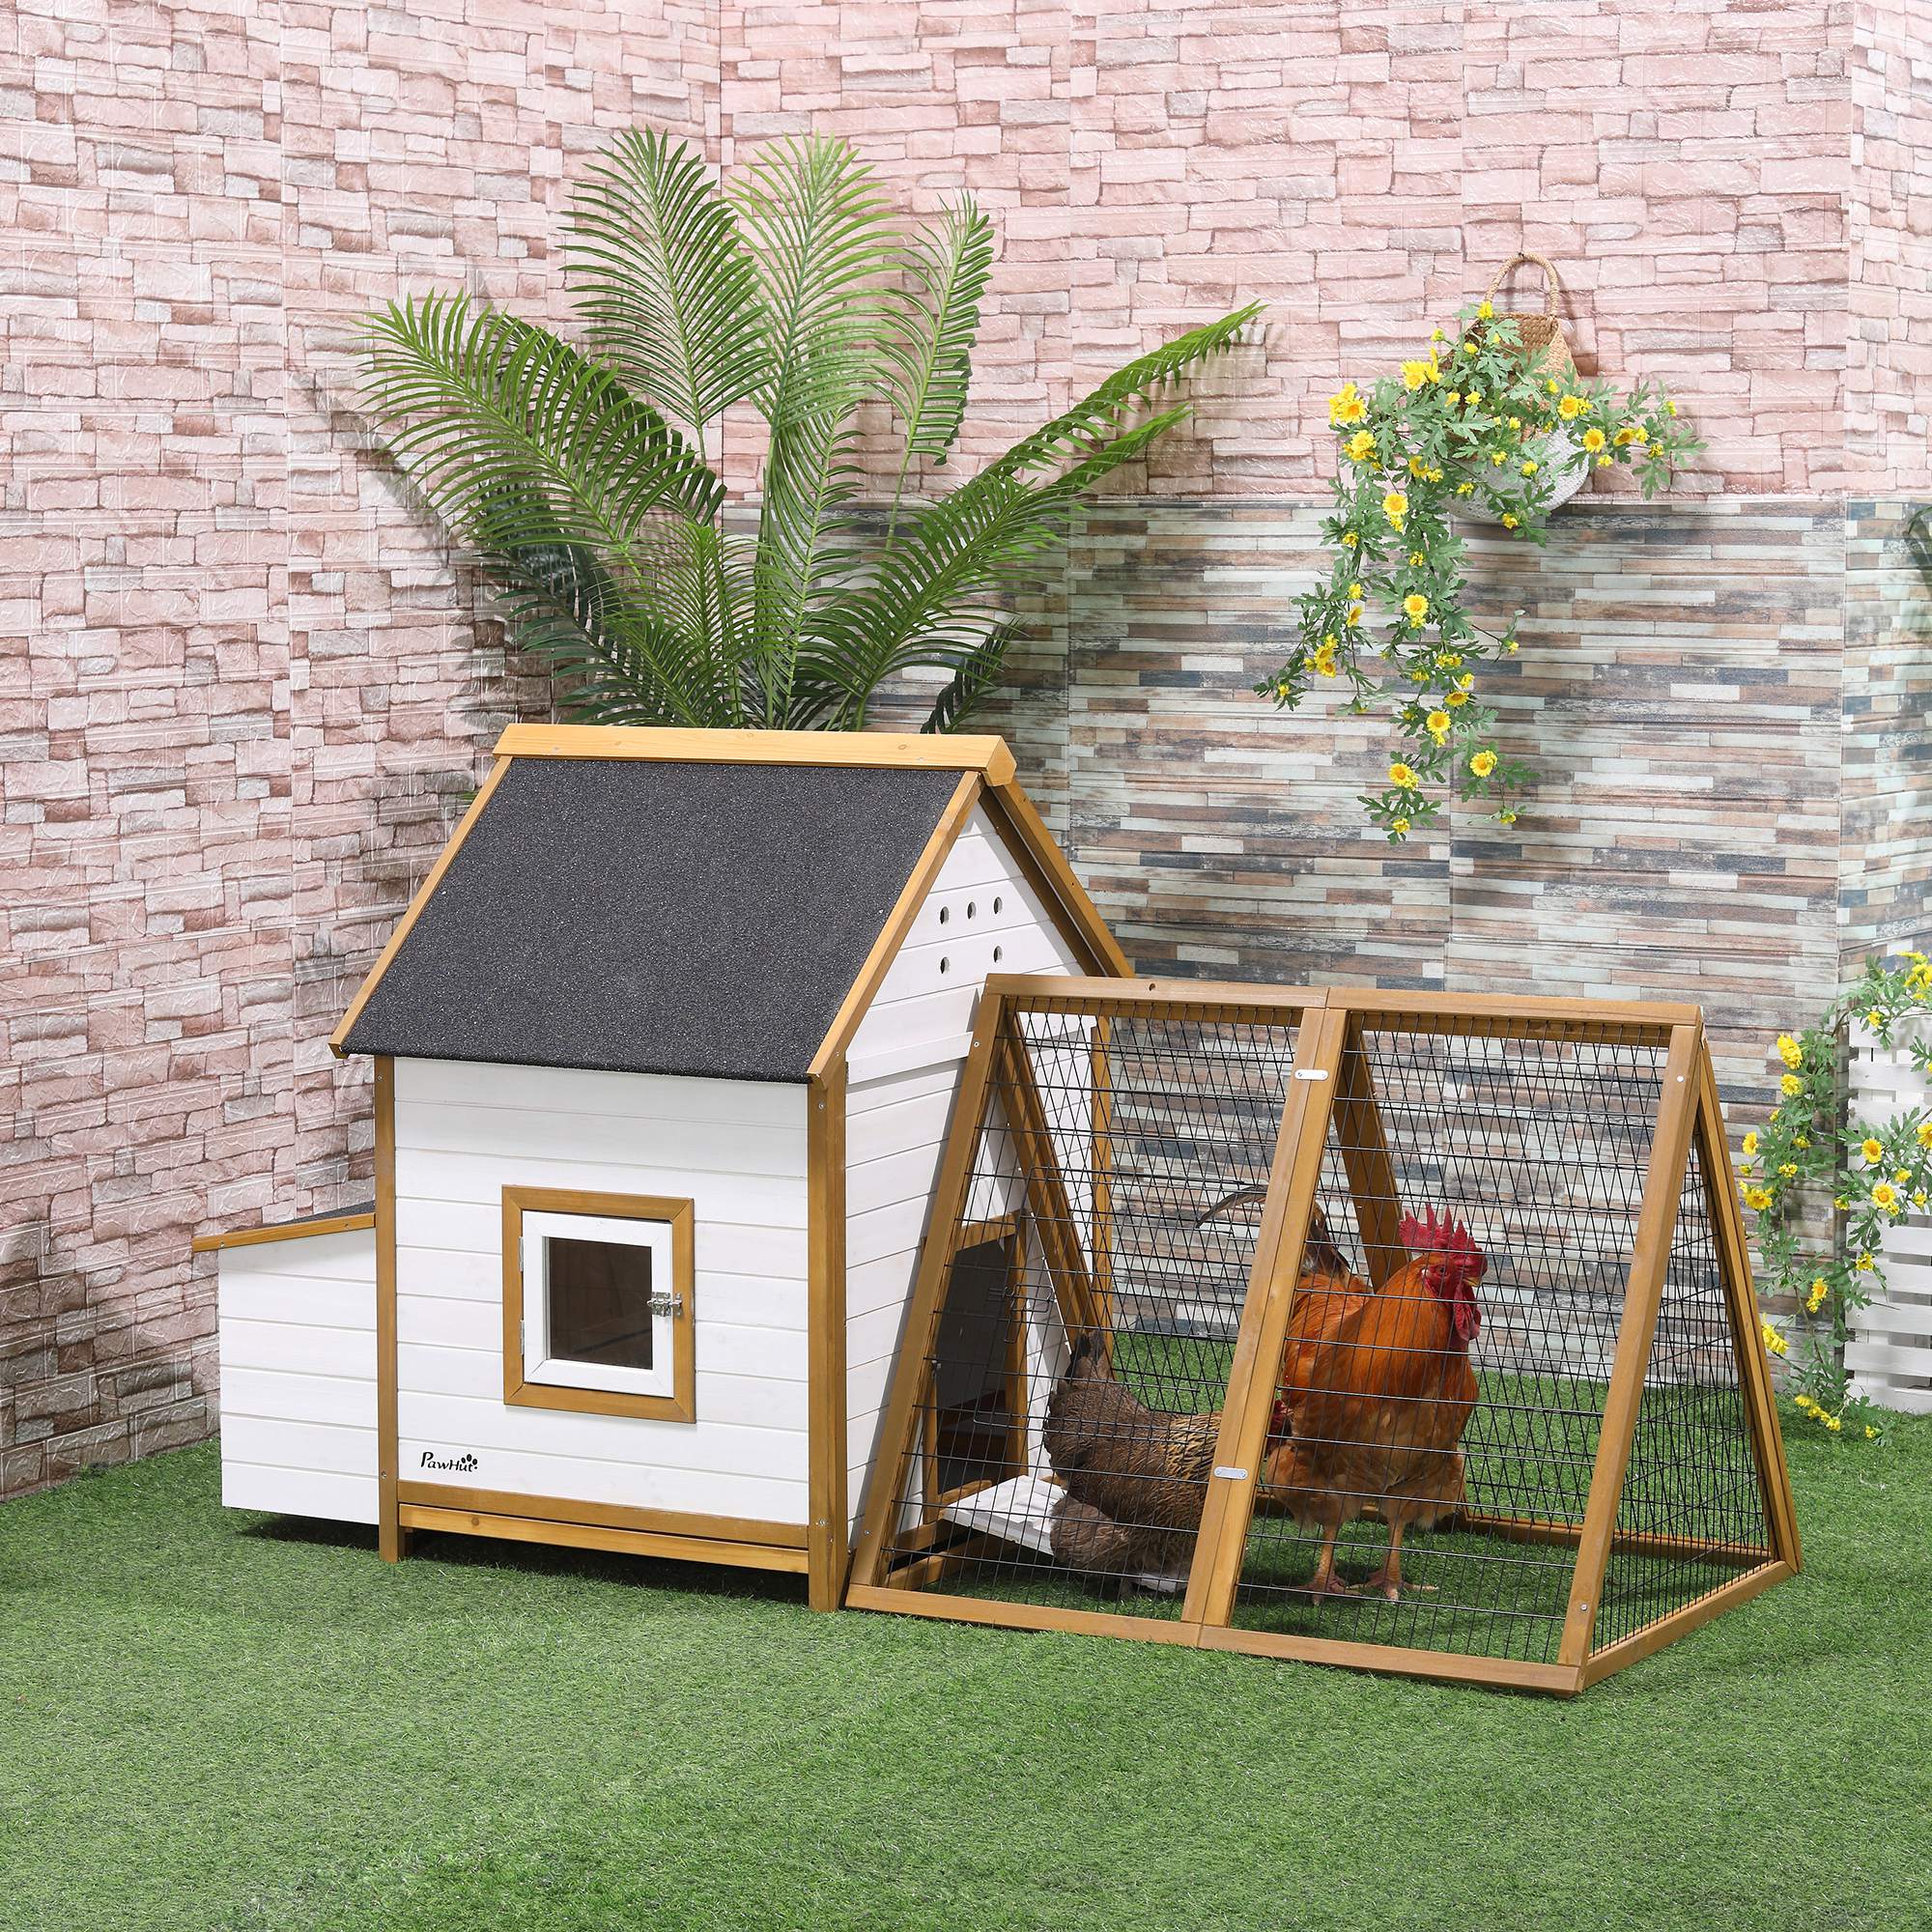 Wooden Chicken Coop with Run, Nesting Box, 197x93 cm, PawHut,